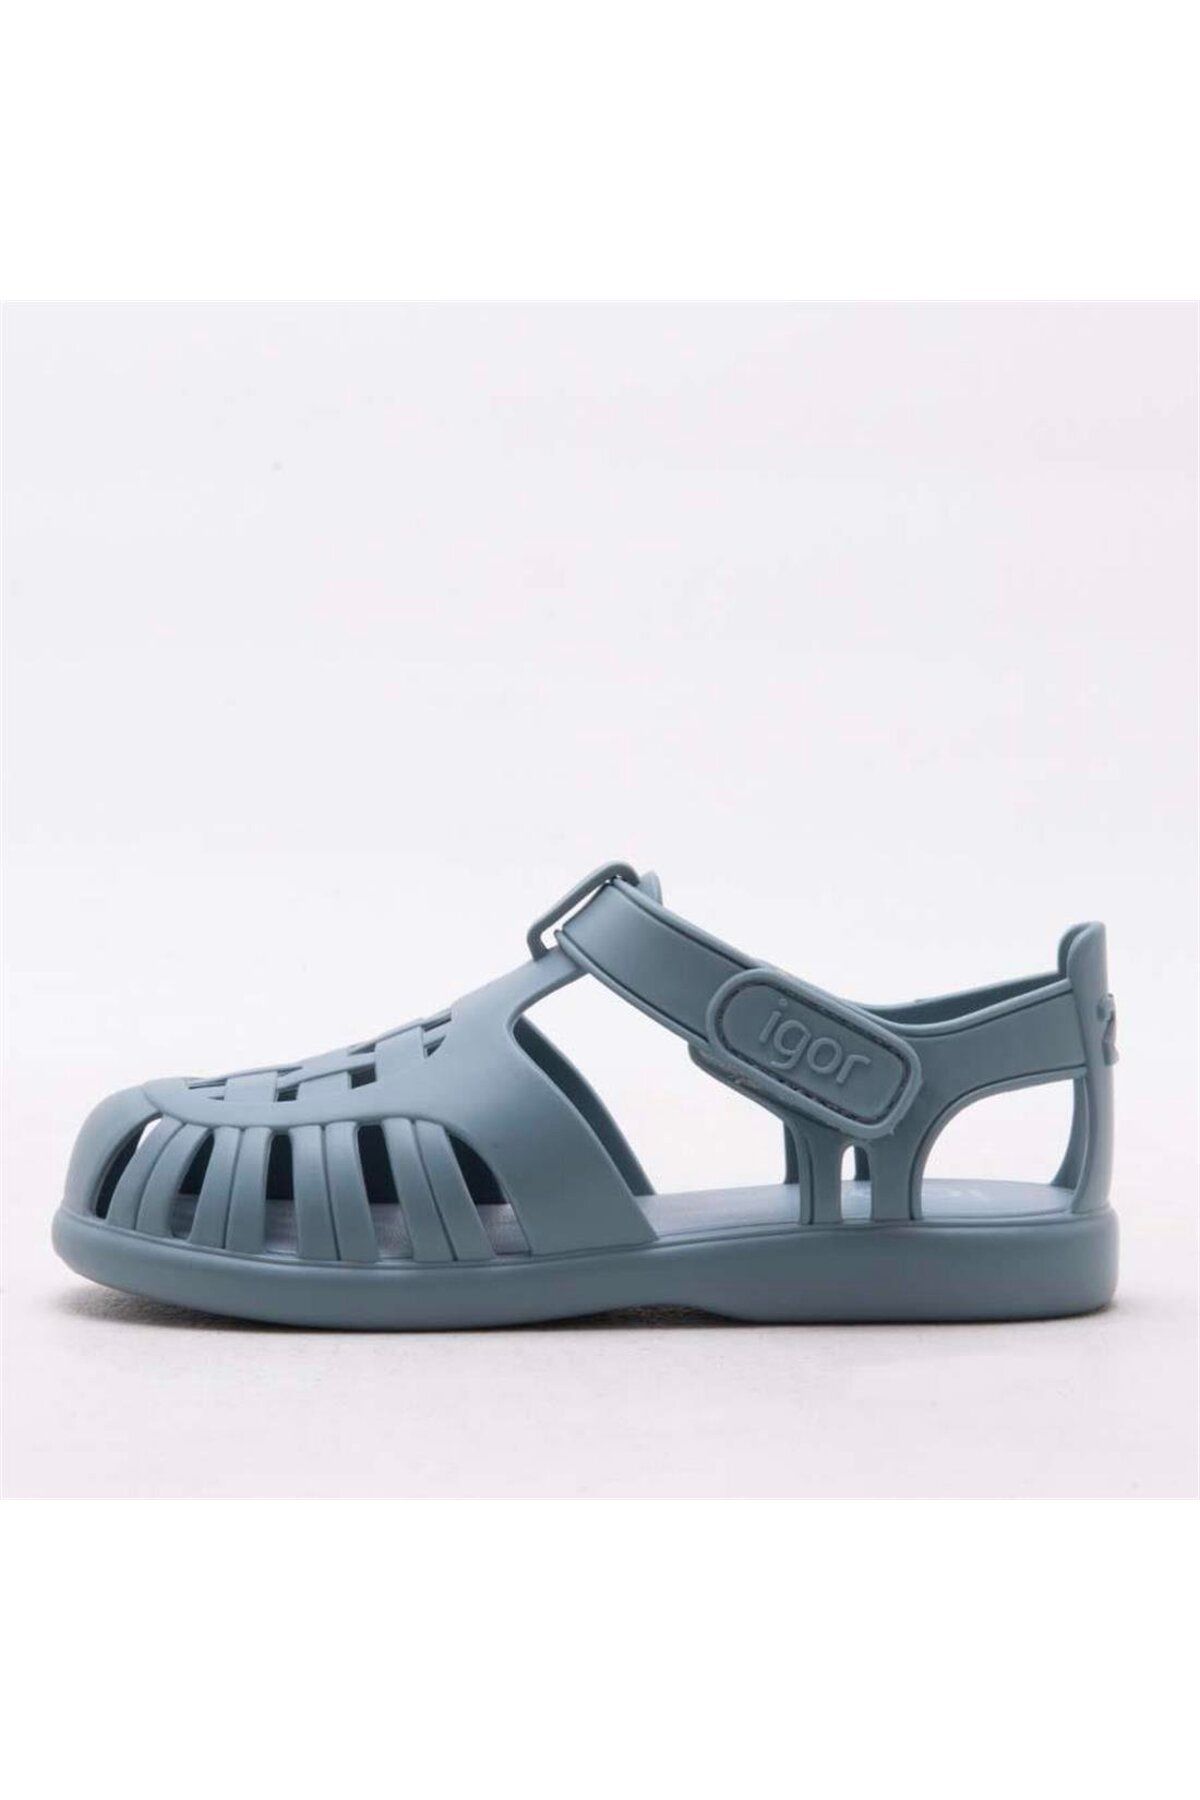 IGOR Tobby Solid Bebek-cocuk Sandalet S10271-013